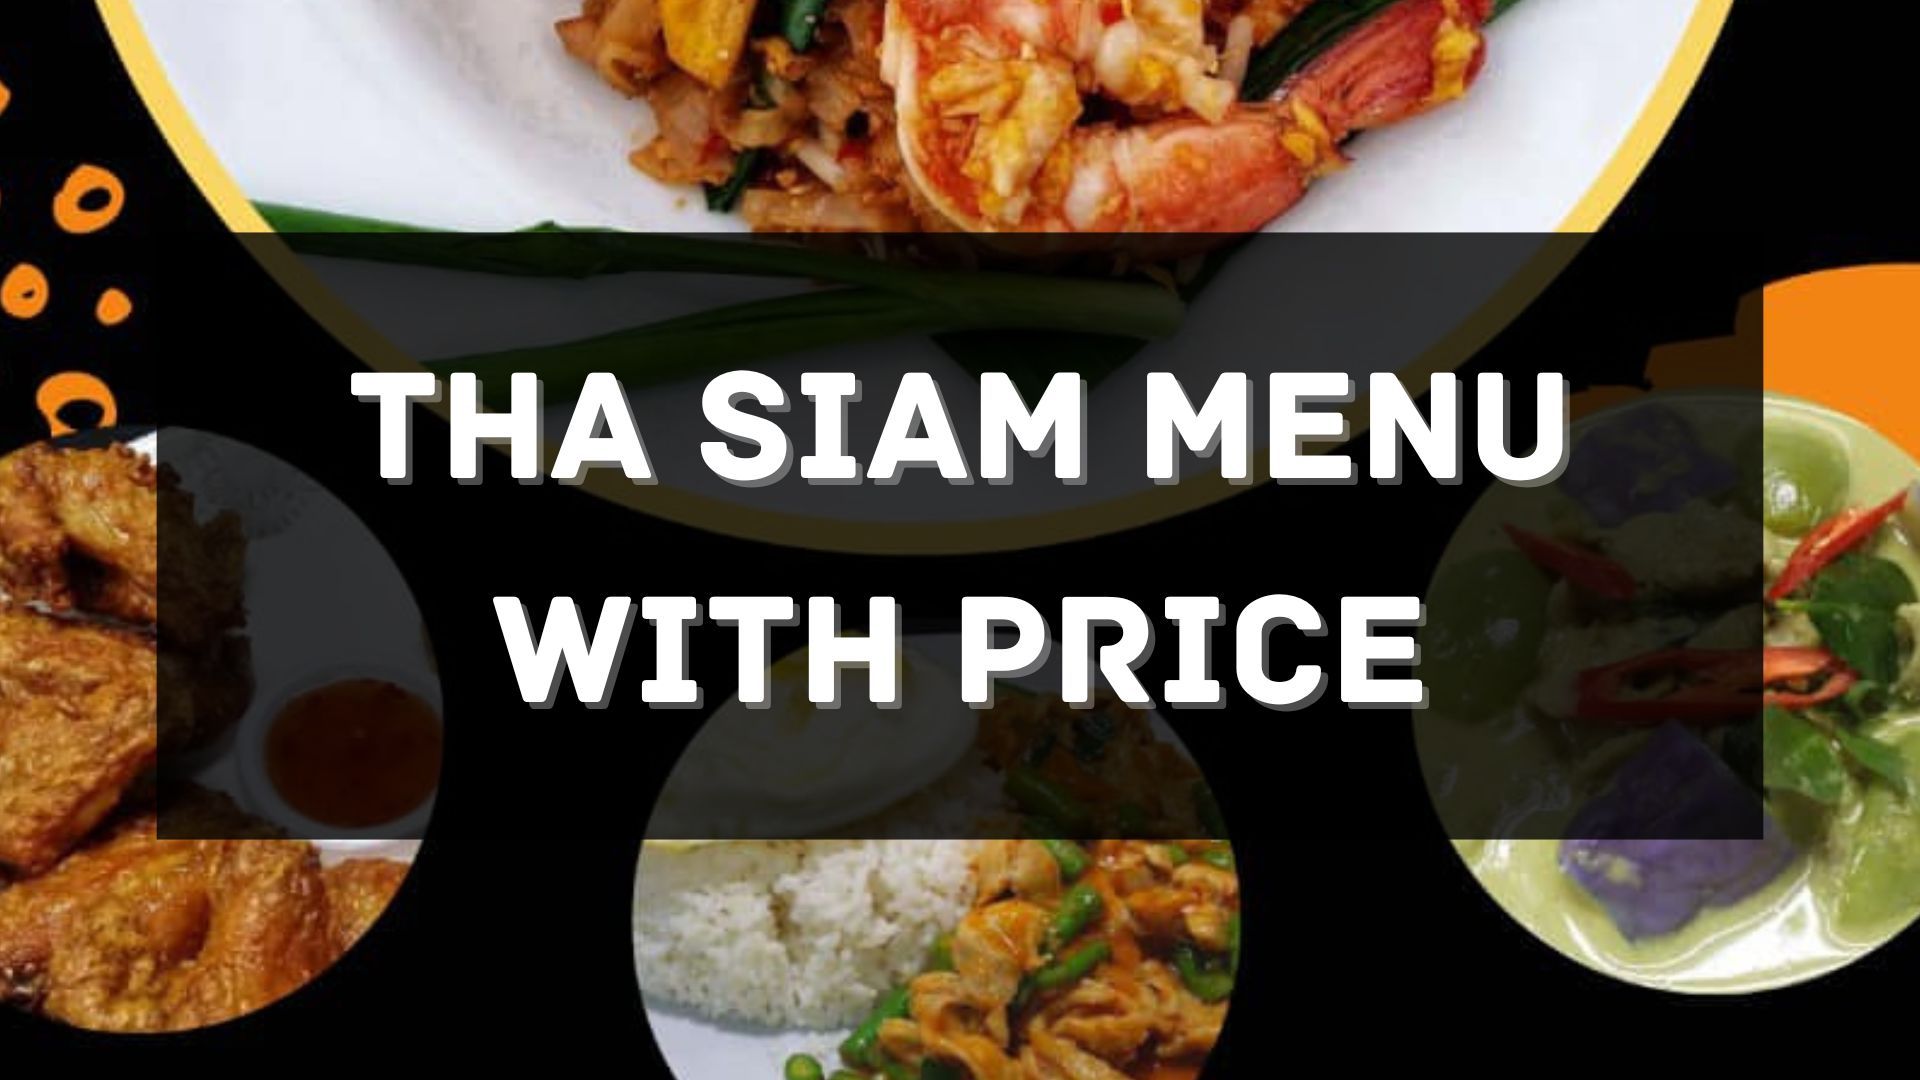 tha siam menu prices singapore